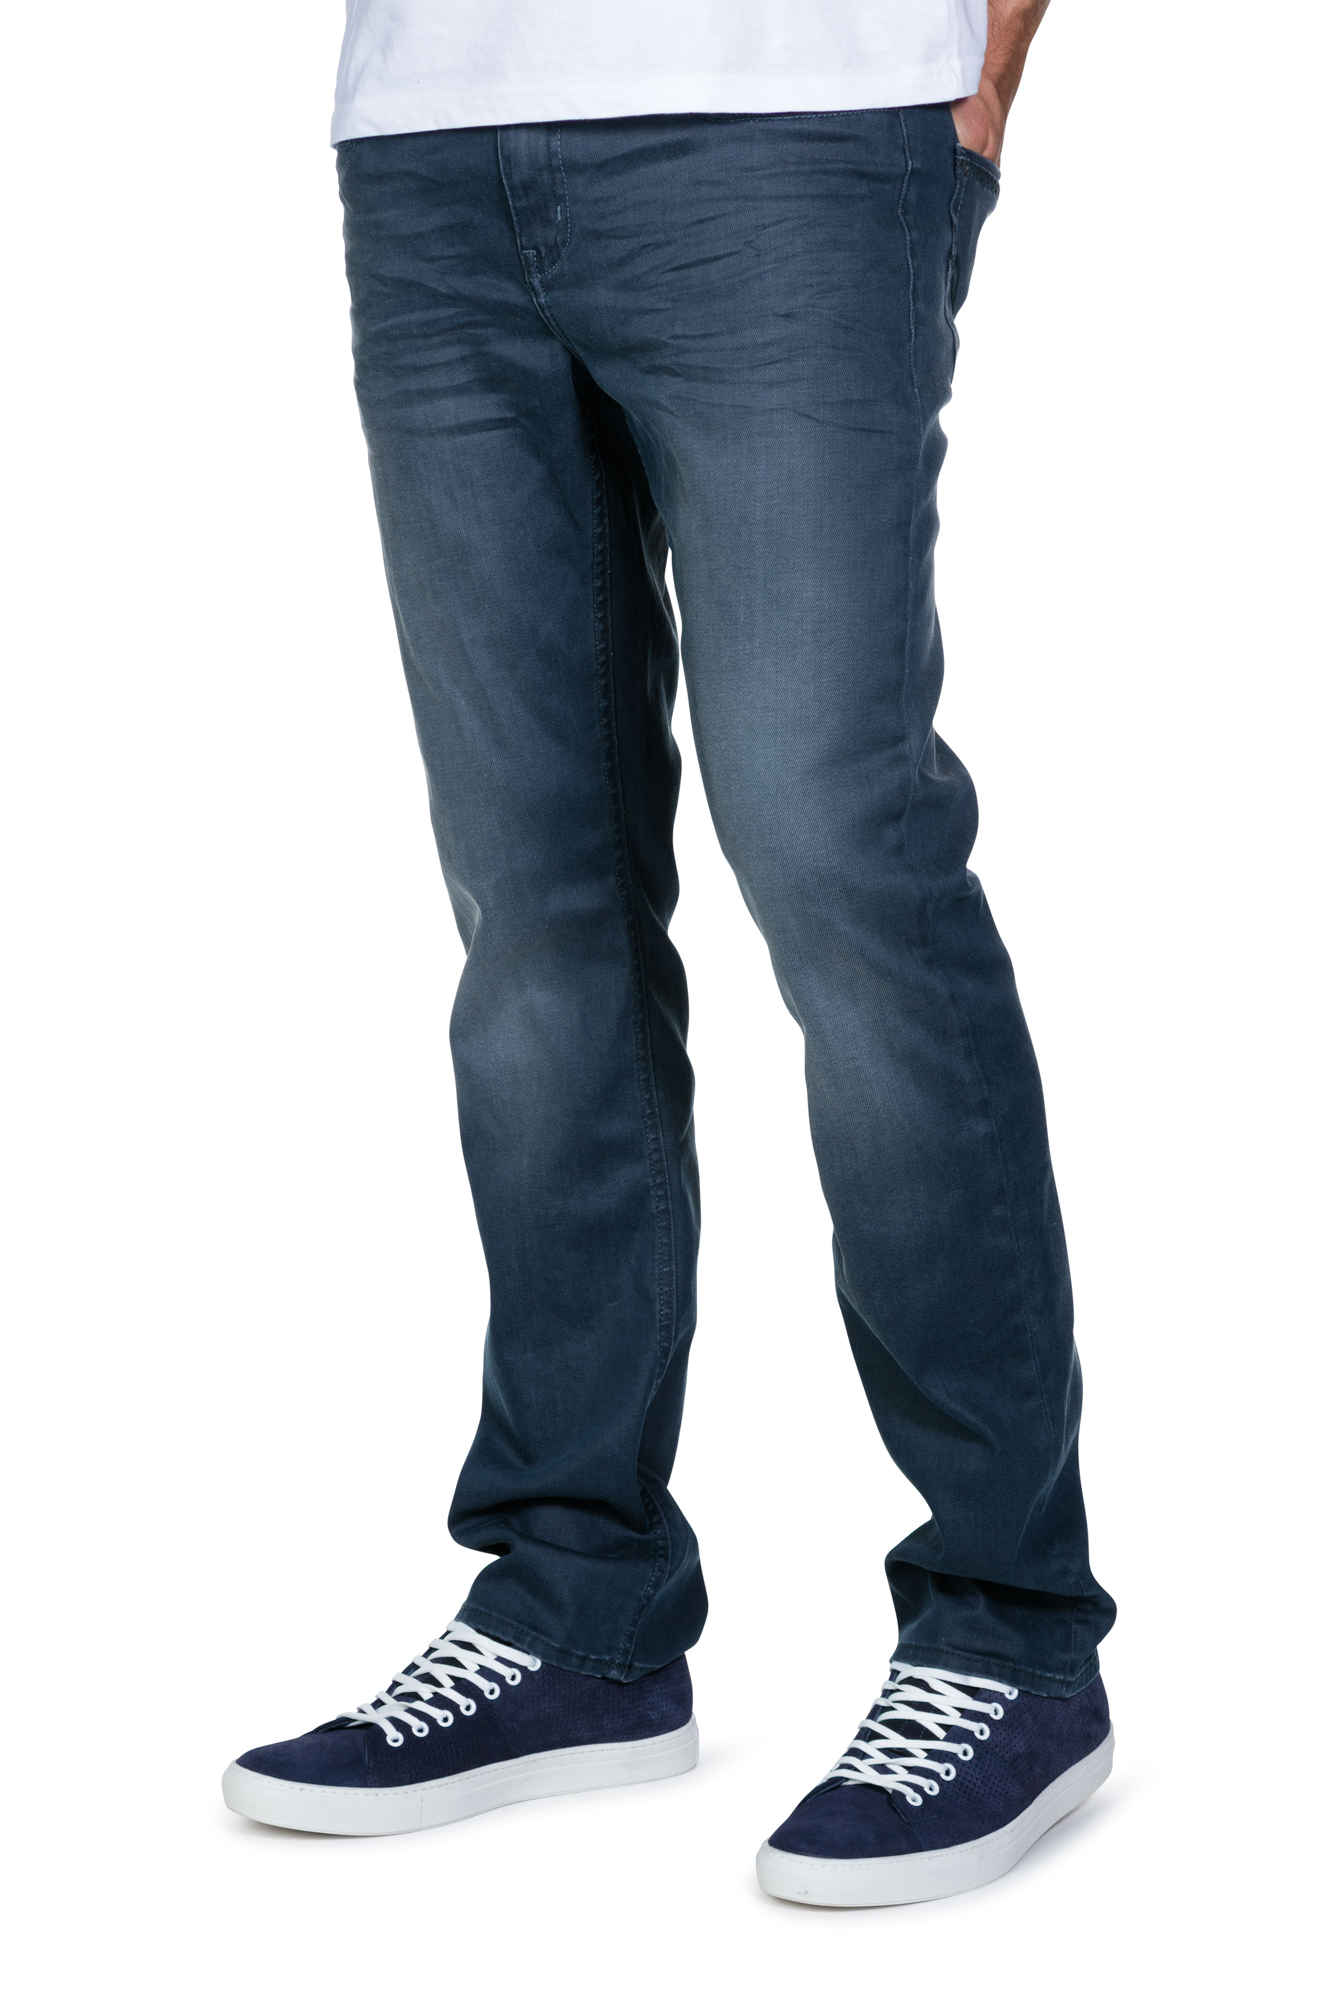 jeans_homme_redman_noah_denim_mock_medium_grey_2.jpg